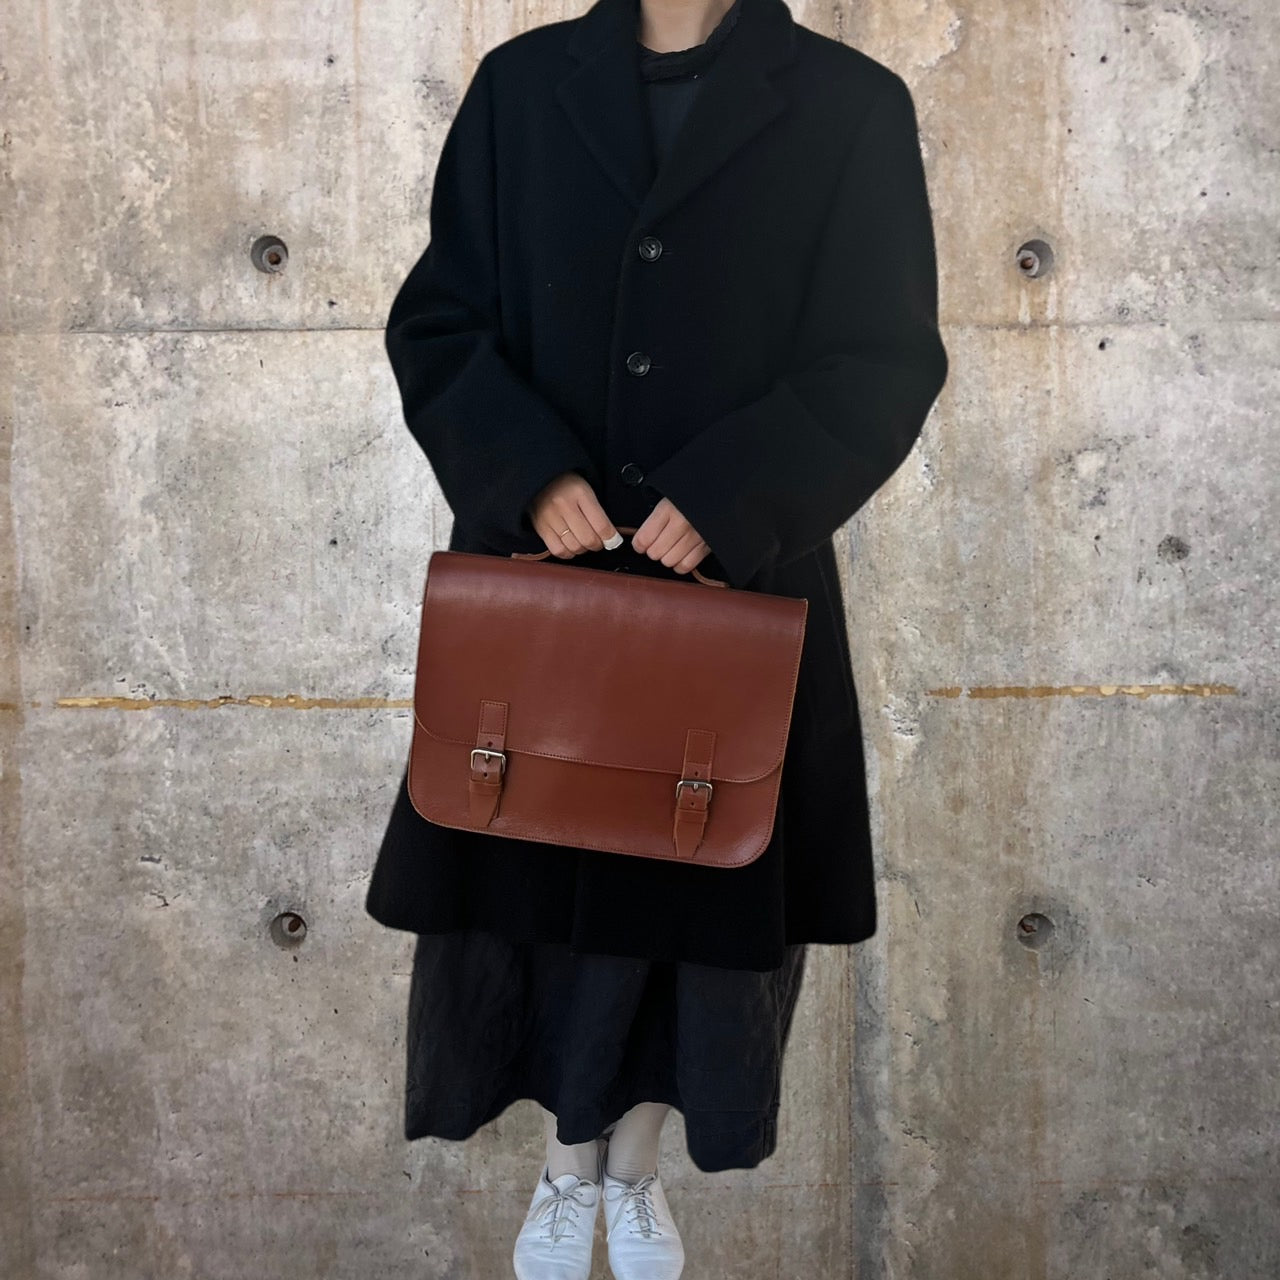 Katsuyuki Yoshida for COMME des GARCONS(カツユキヨシダフォーコムデギャルソン) aoyama limited 2WAY leather shoulder bag/青山限定2WAYレザーショルダーバッグ/吉田克幸 ブラウン